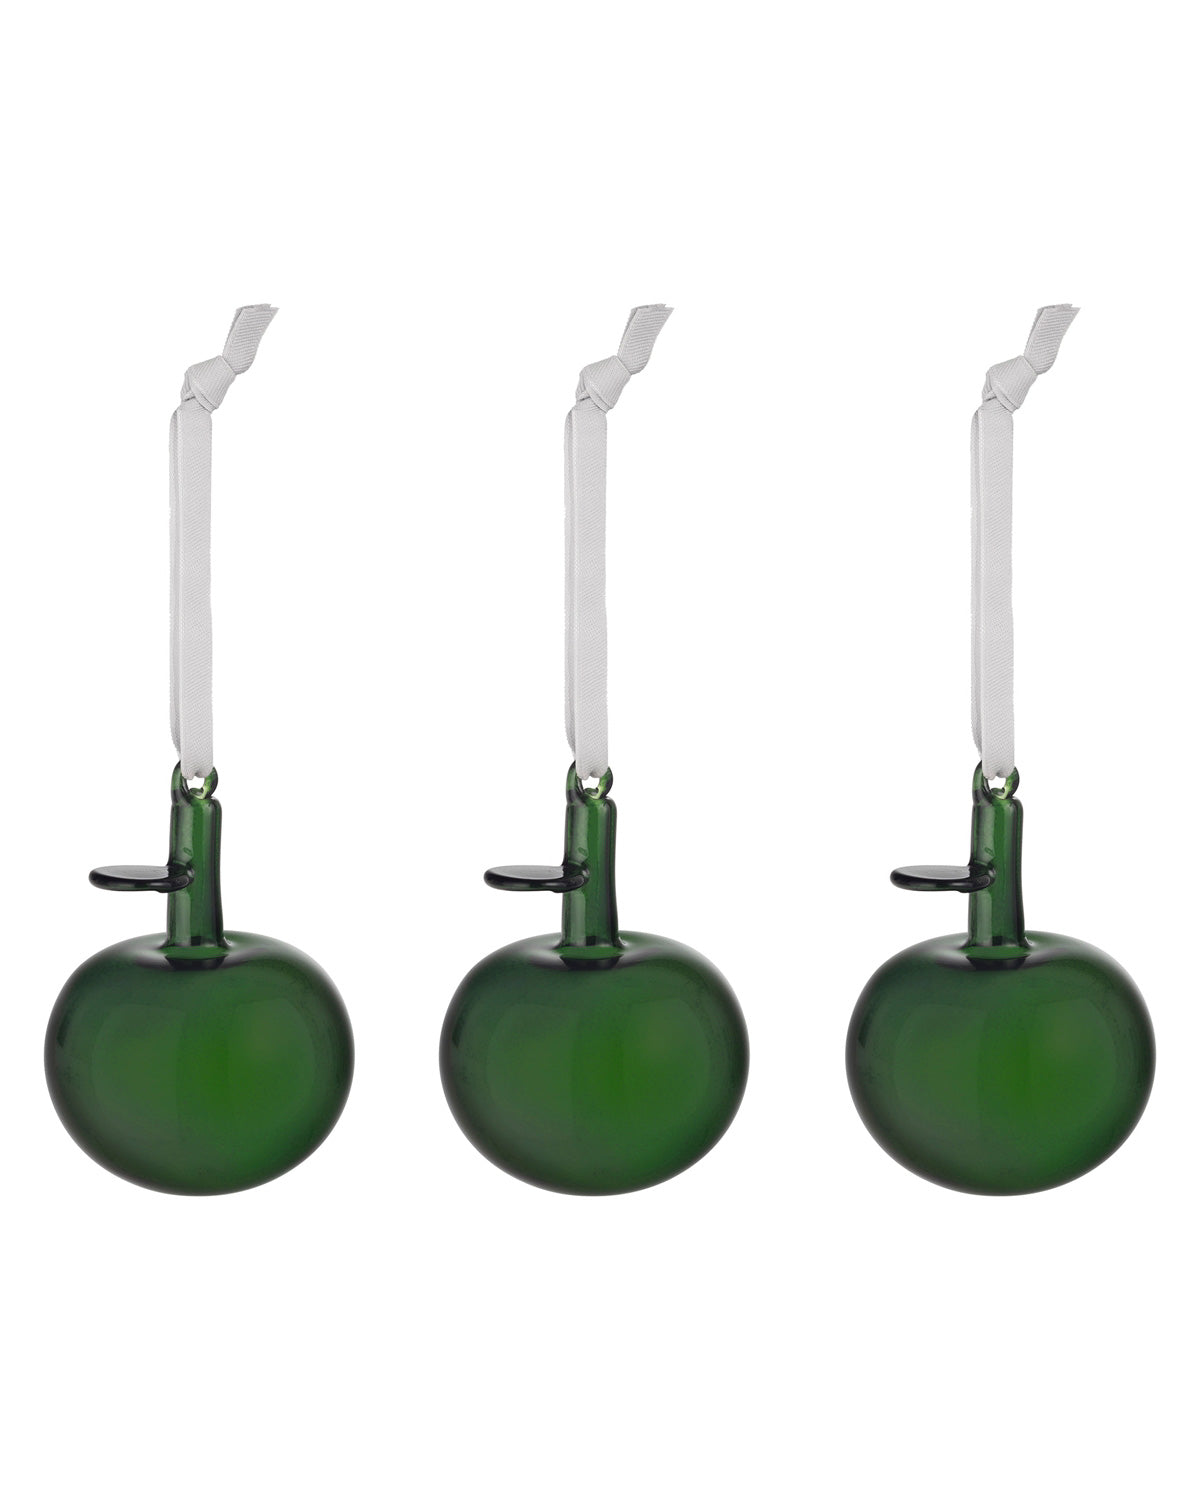 Iittala Glass Apple Ornament Set/3, Green